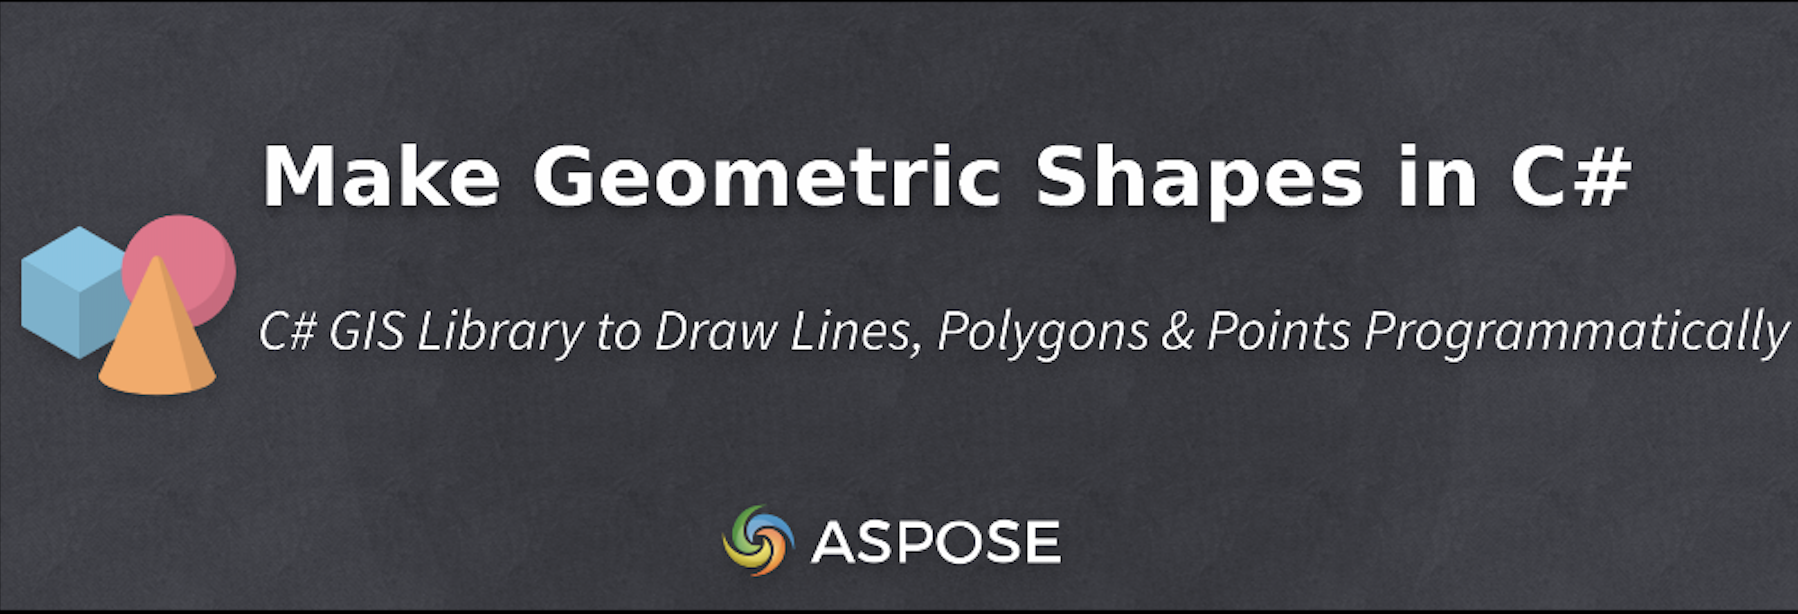 Make Geometric Shapes using a C# GIS Library